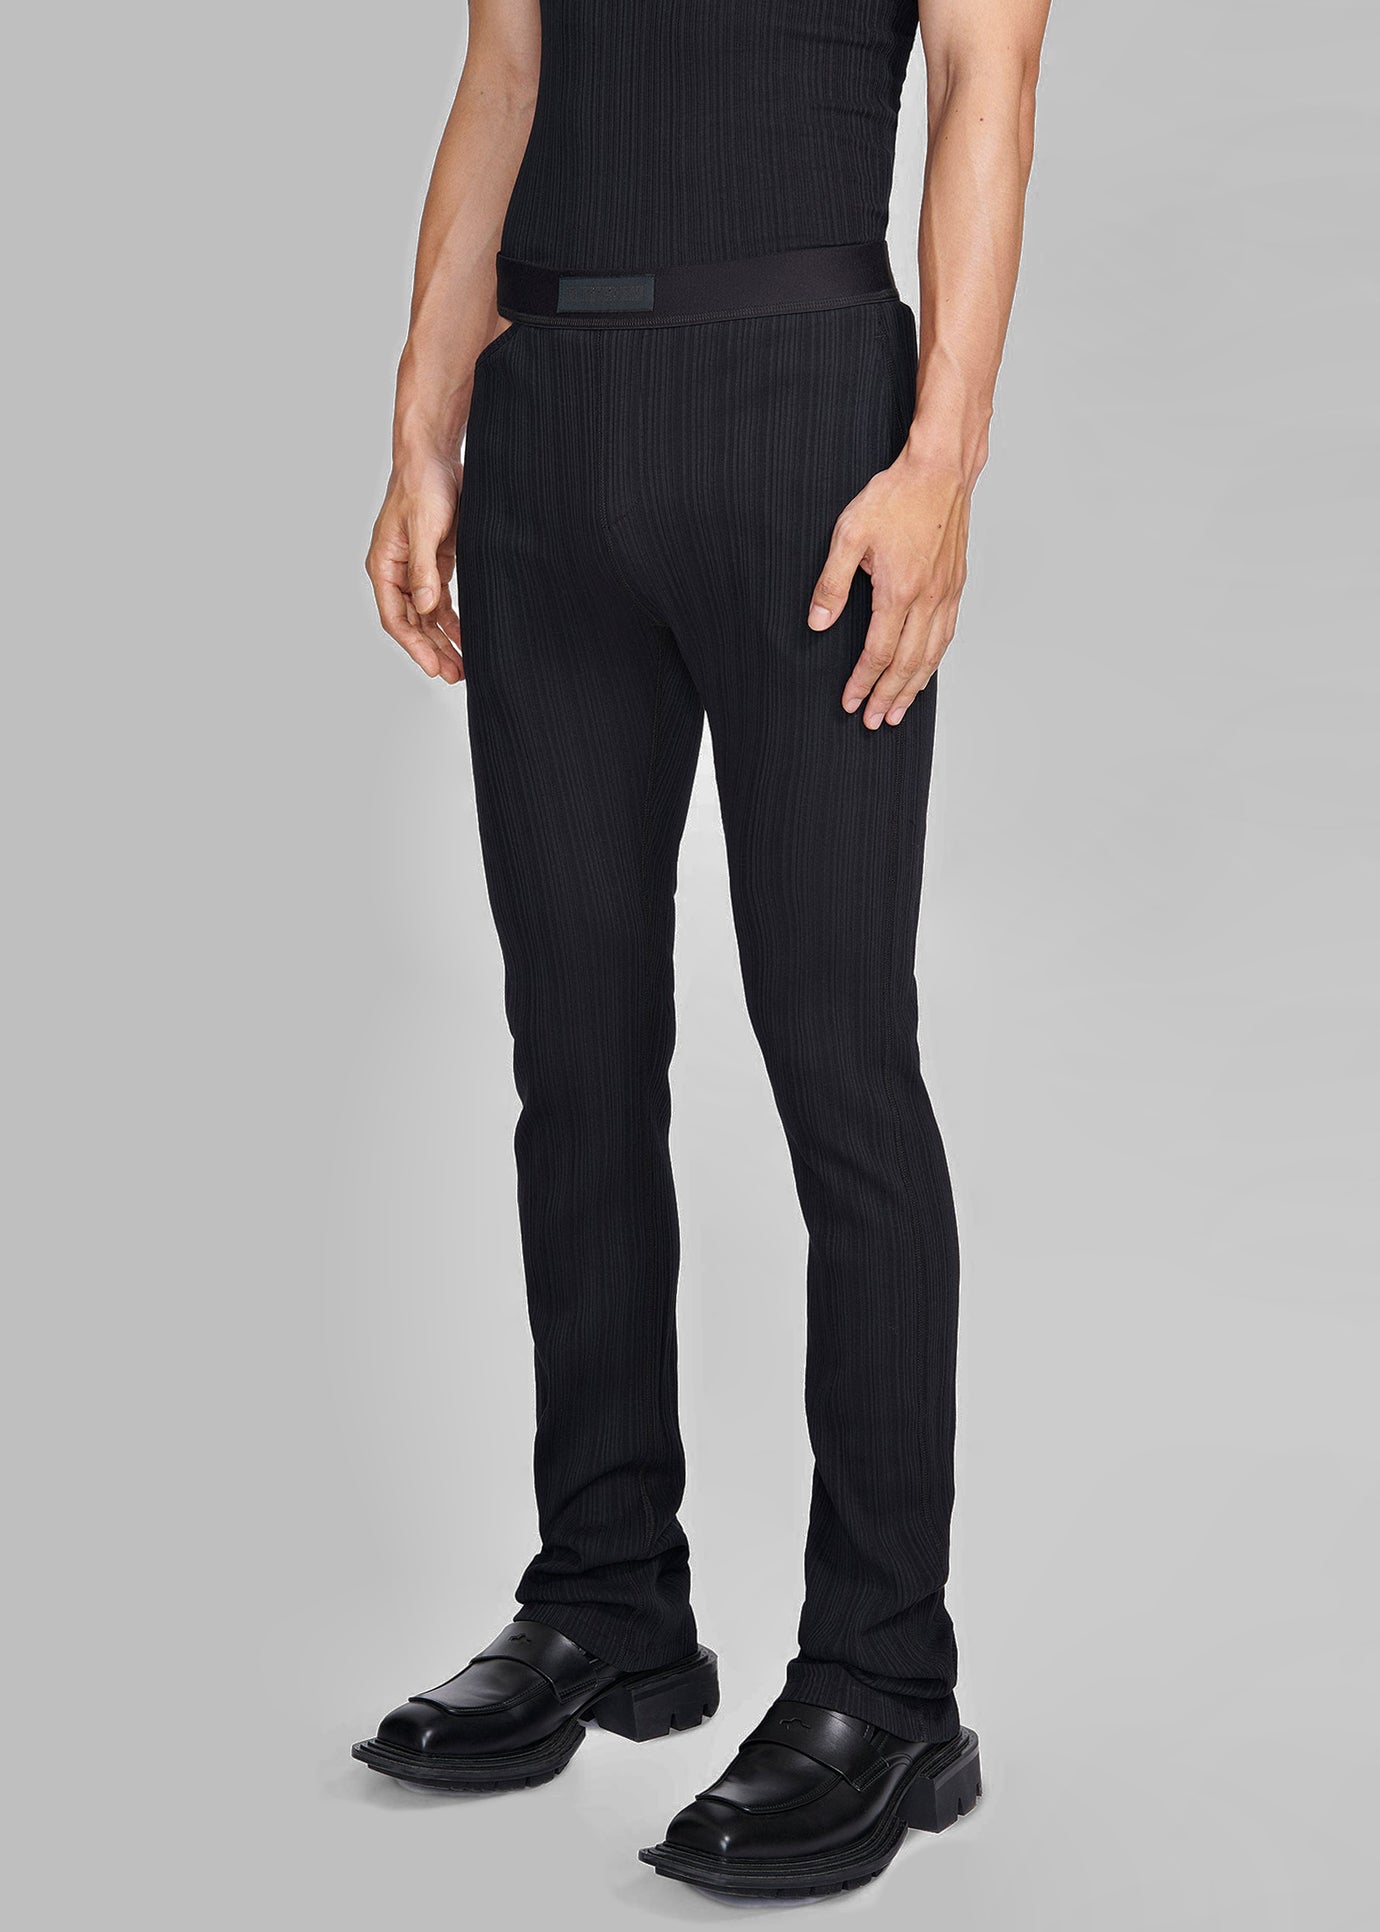 Louis Gabriel Nouchi Flared Loungewear Pants With Signature Opening - Black - 1